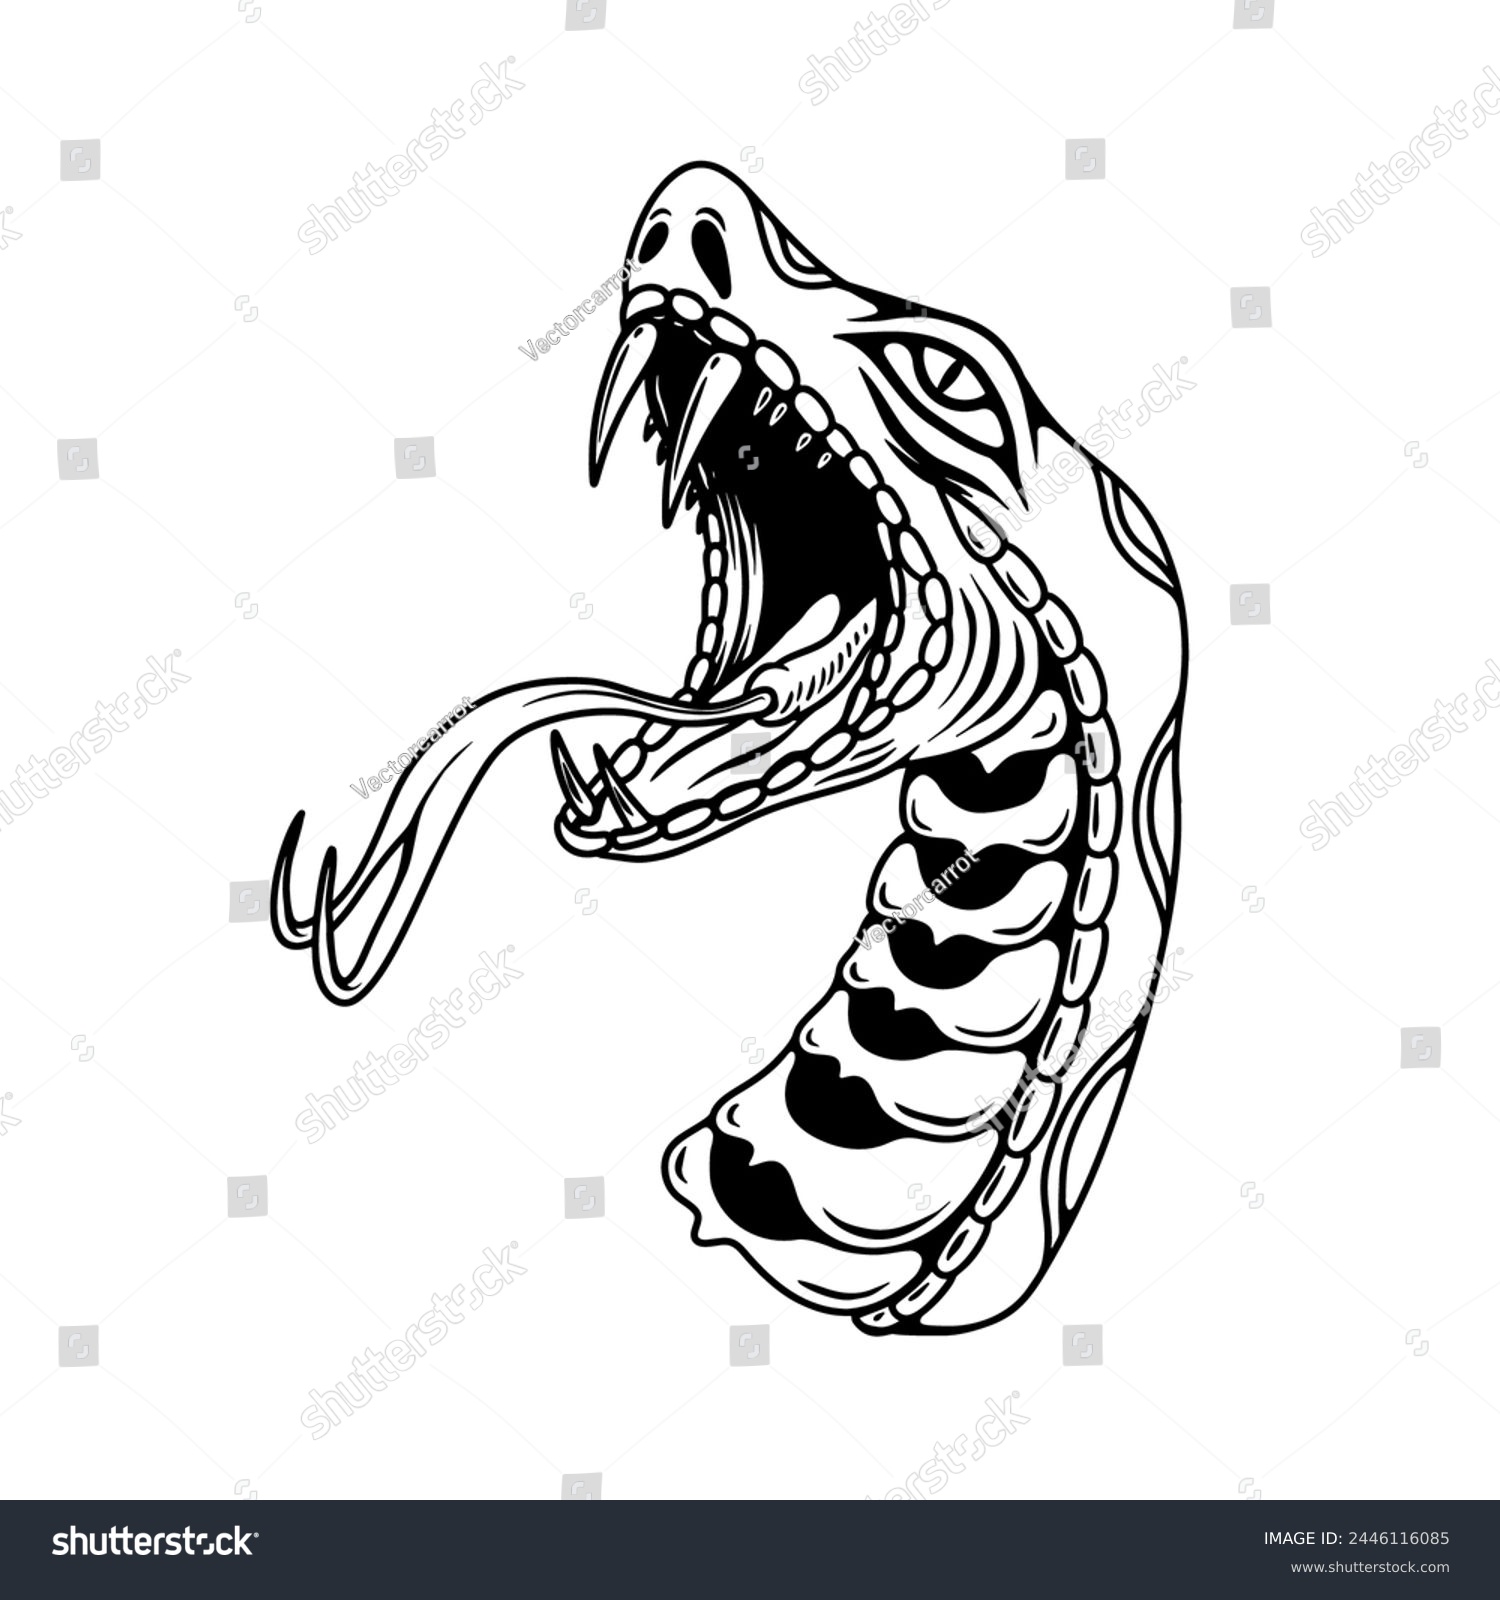 SVG of Illustration of snake head in tattoo style. Design element for poster, card, banner.  svg